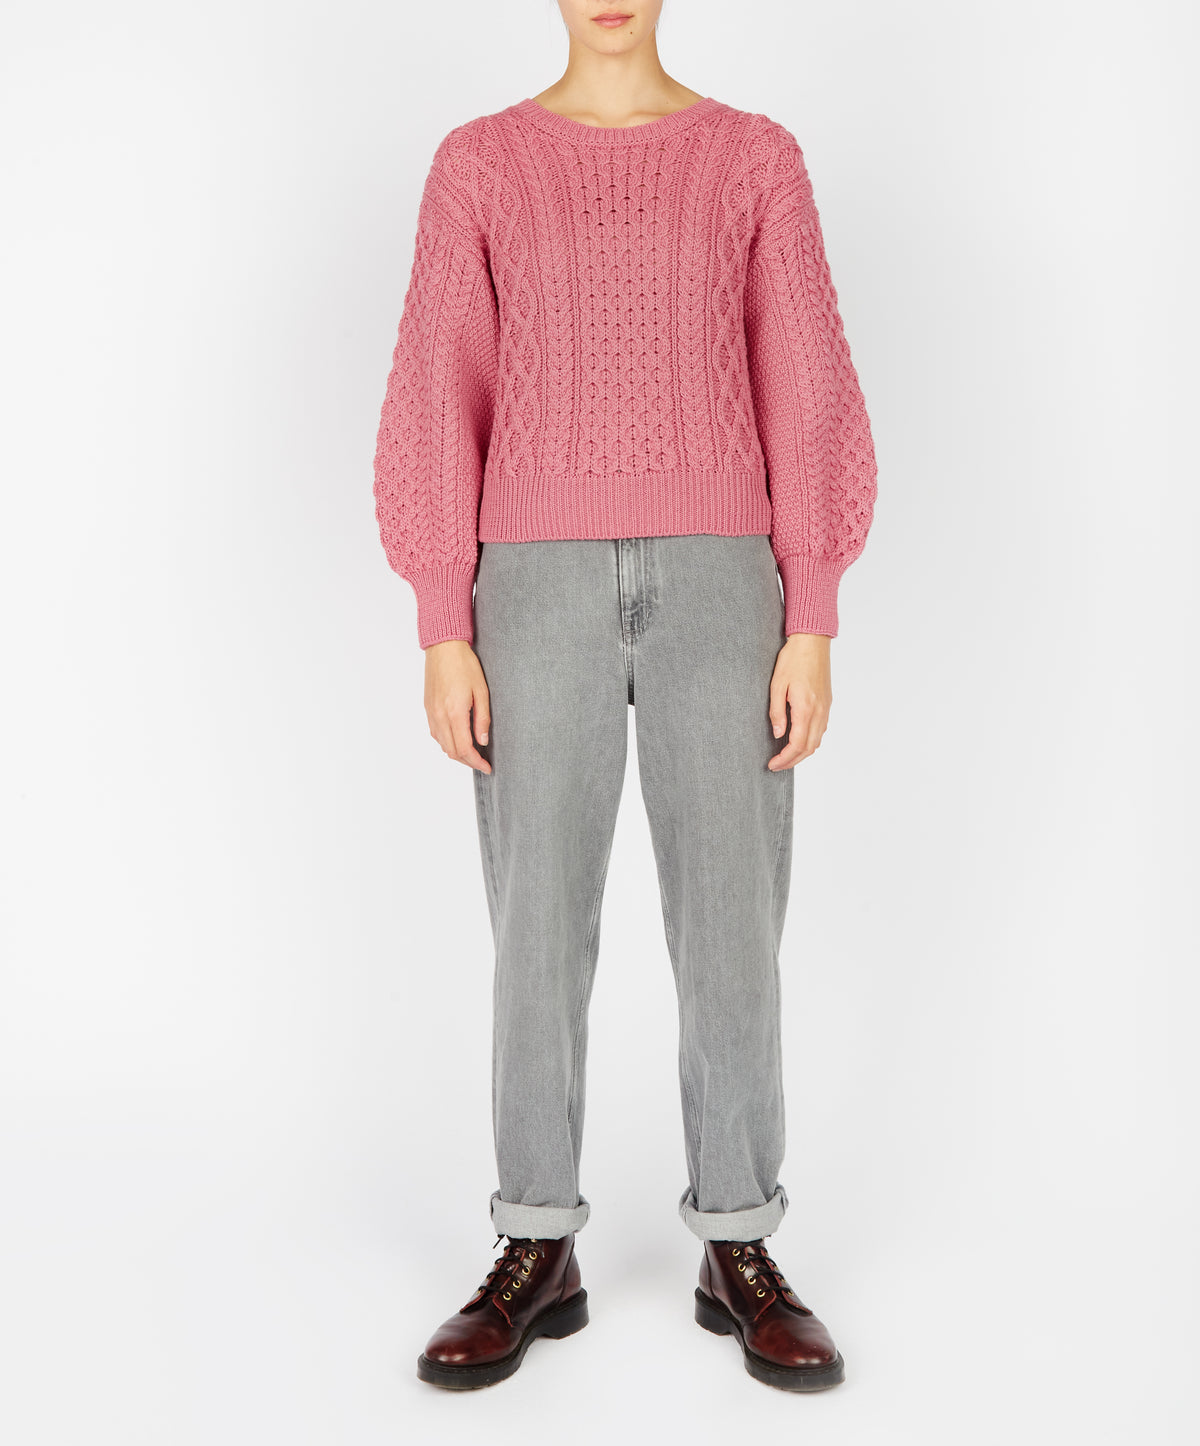 IrelandsEye Knitwear Honeysuckle Cropped Aran Sweater Rosa Pink